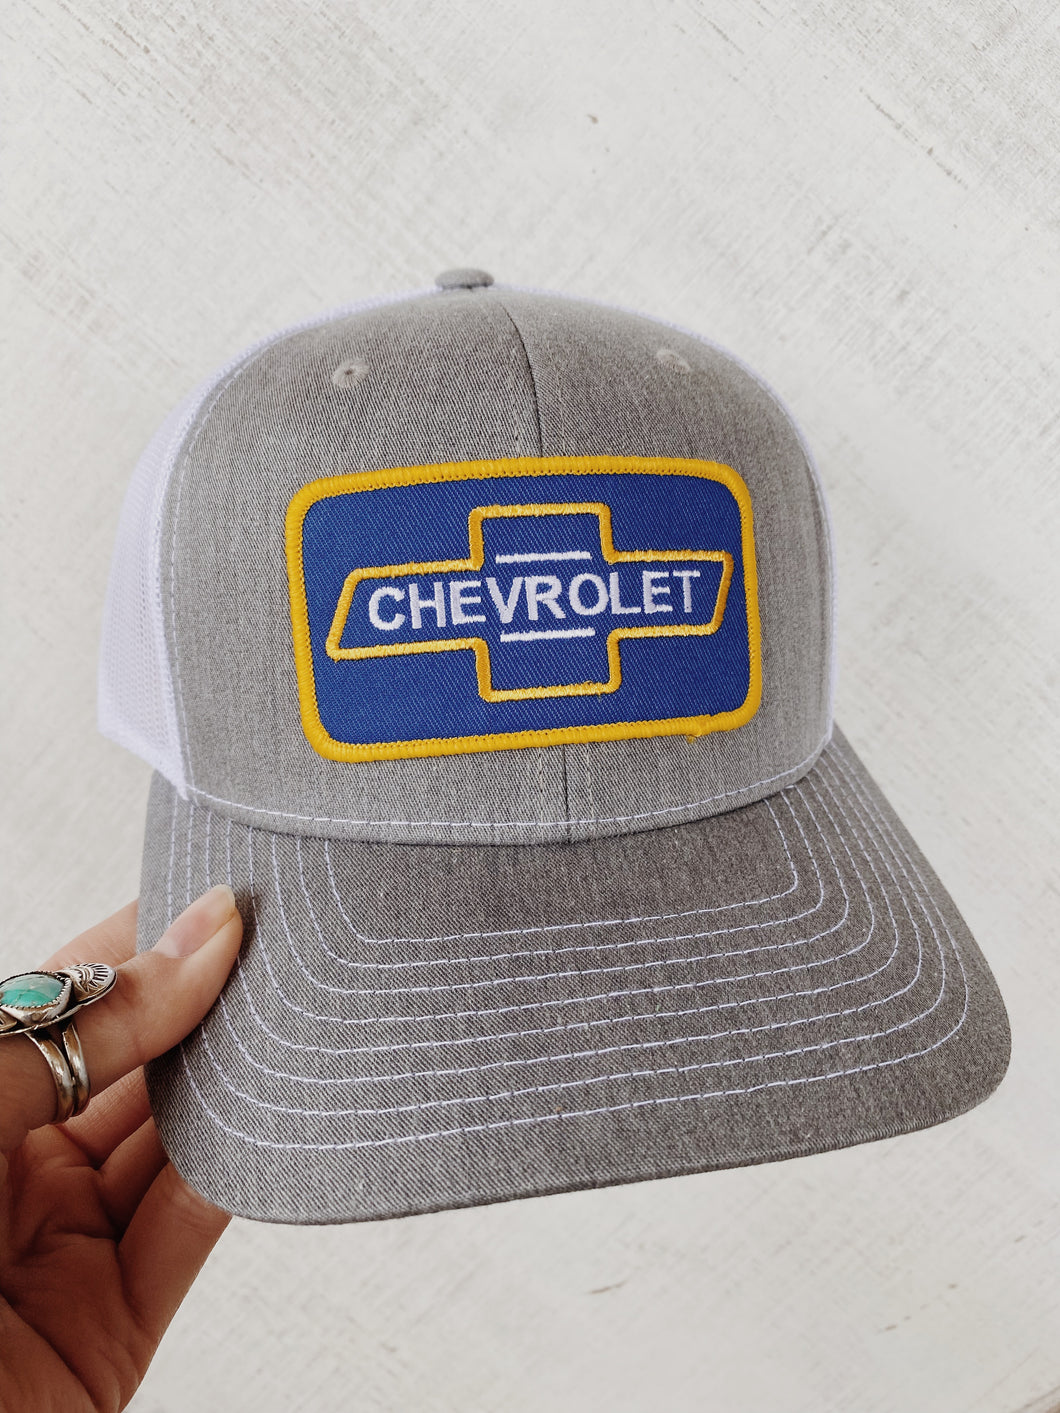 Chevrolet Hat